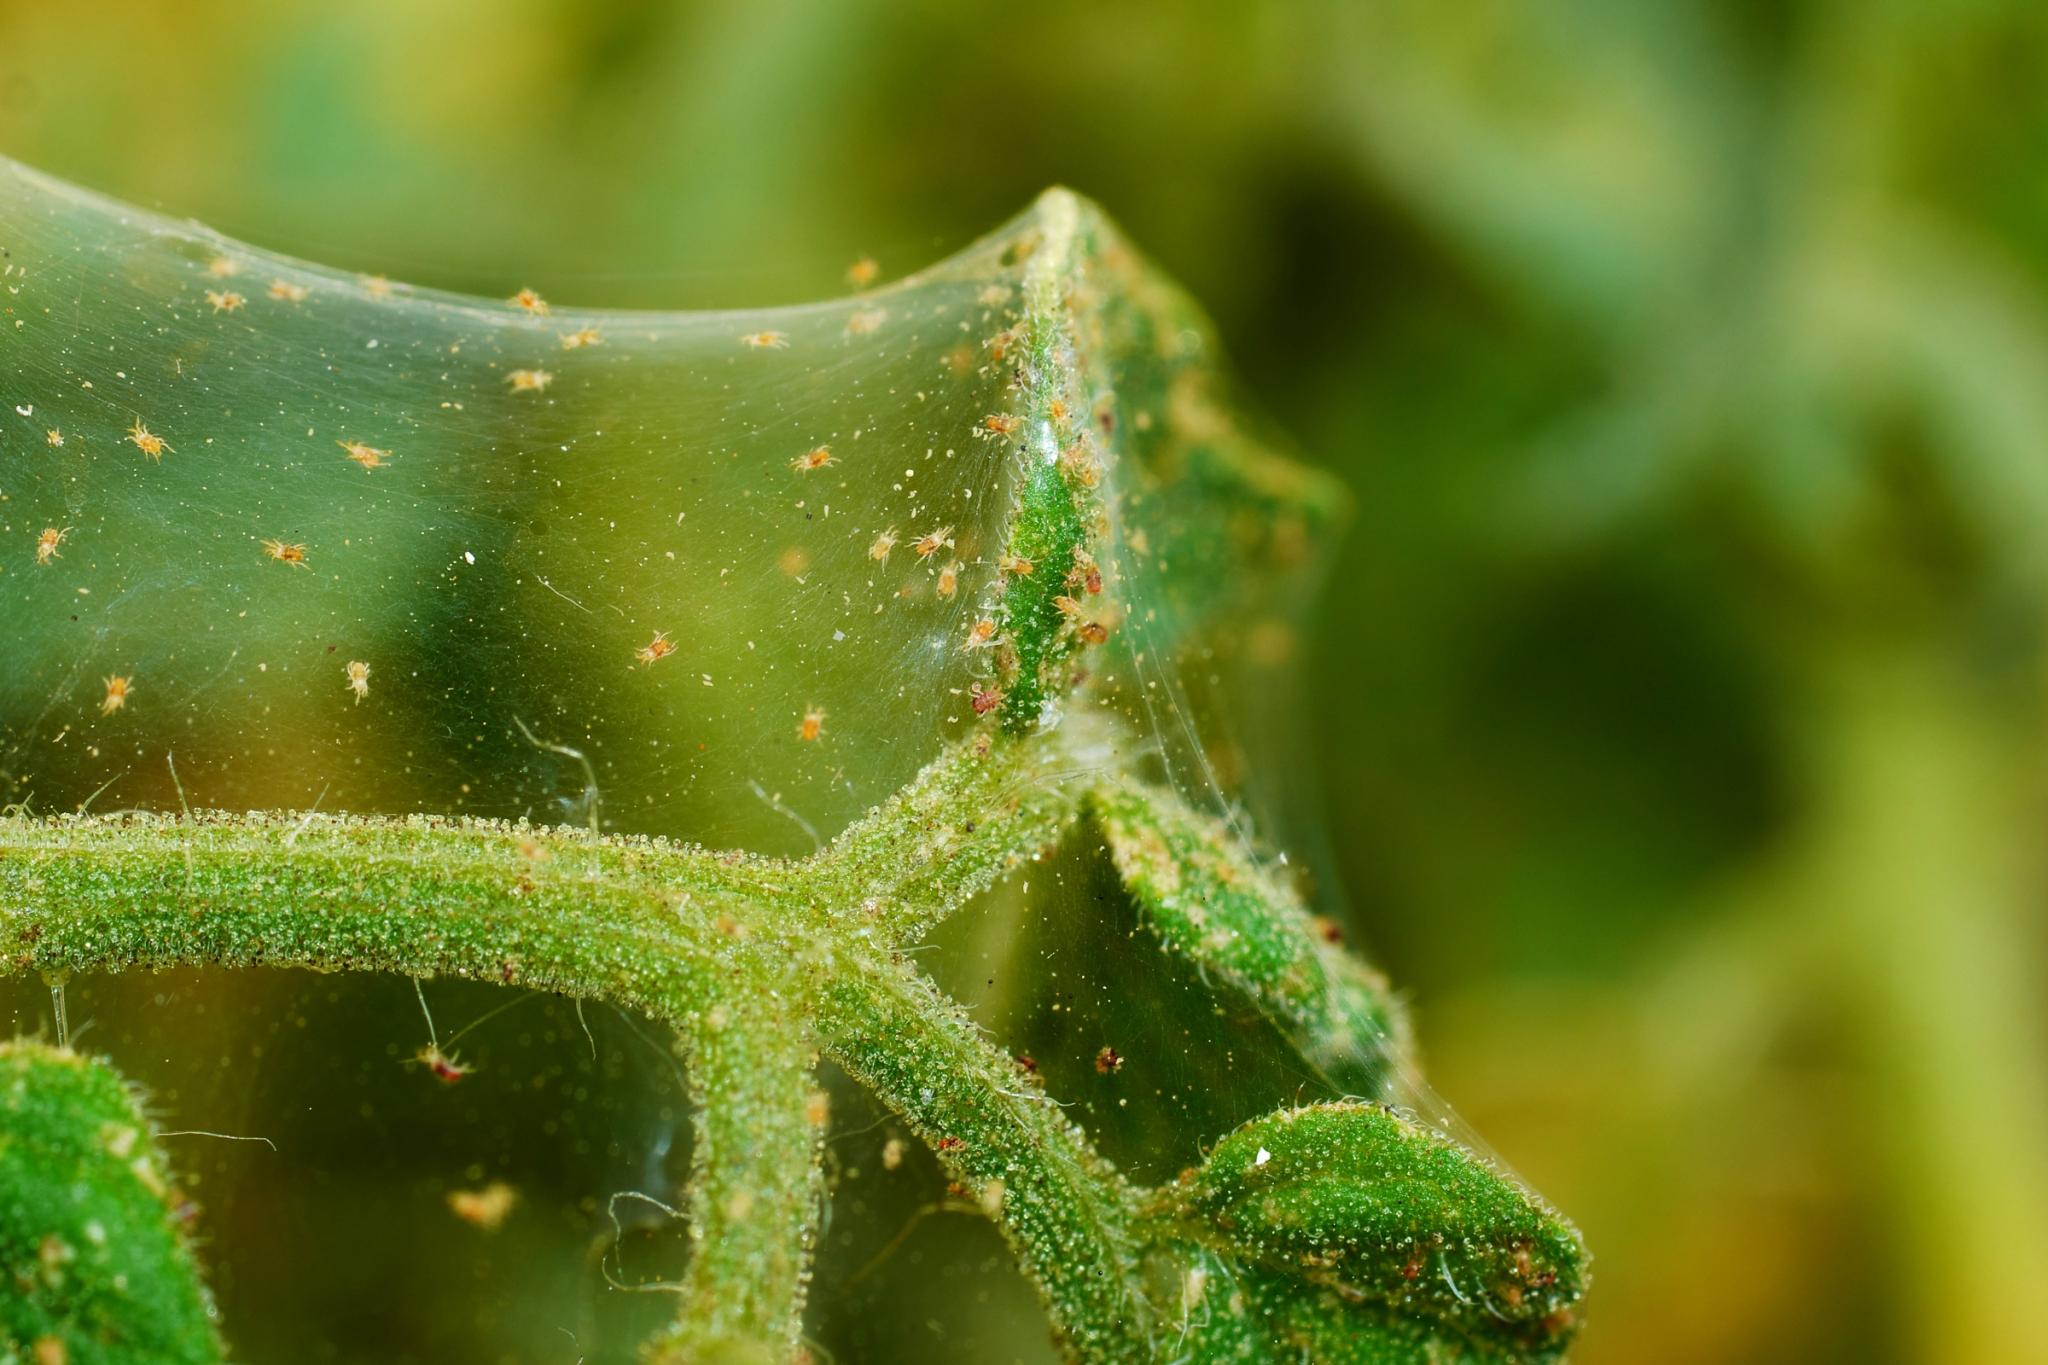 Spider mites on plant. Photo by Floki/Shutterstock